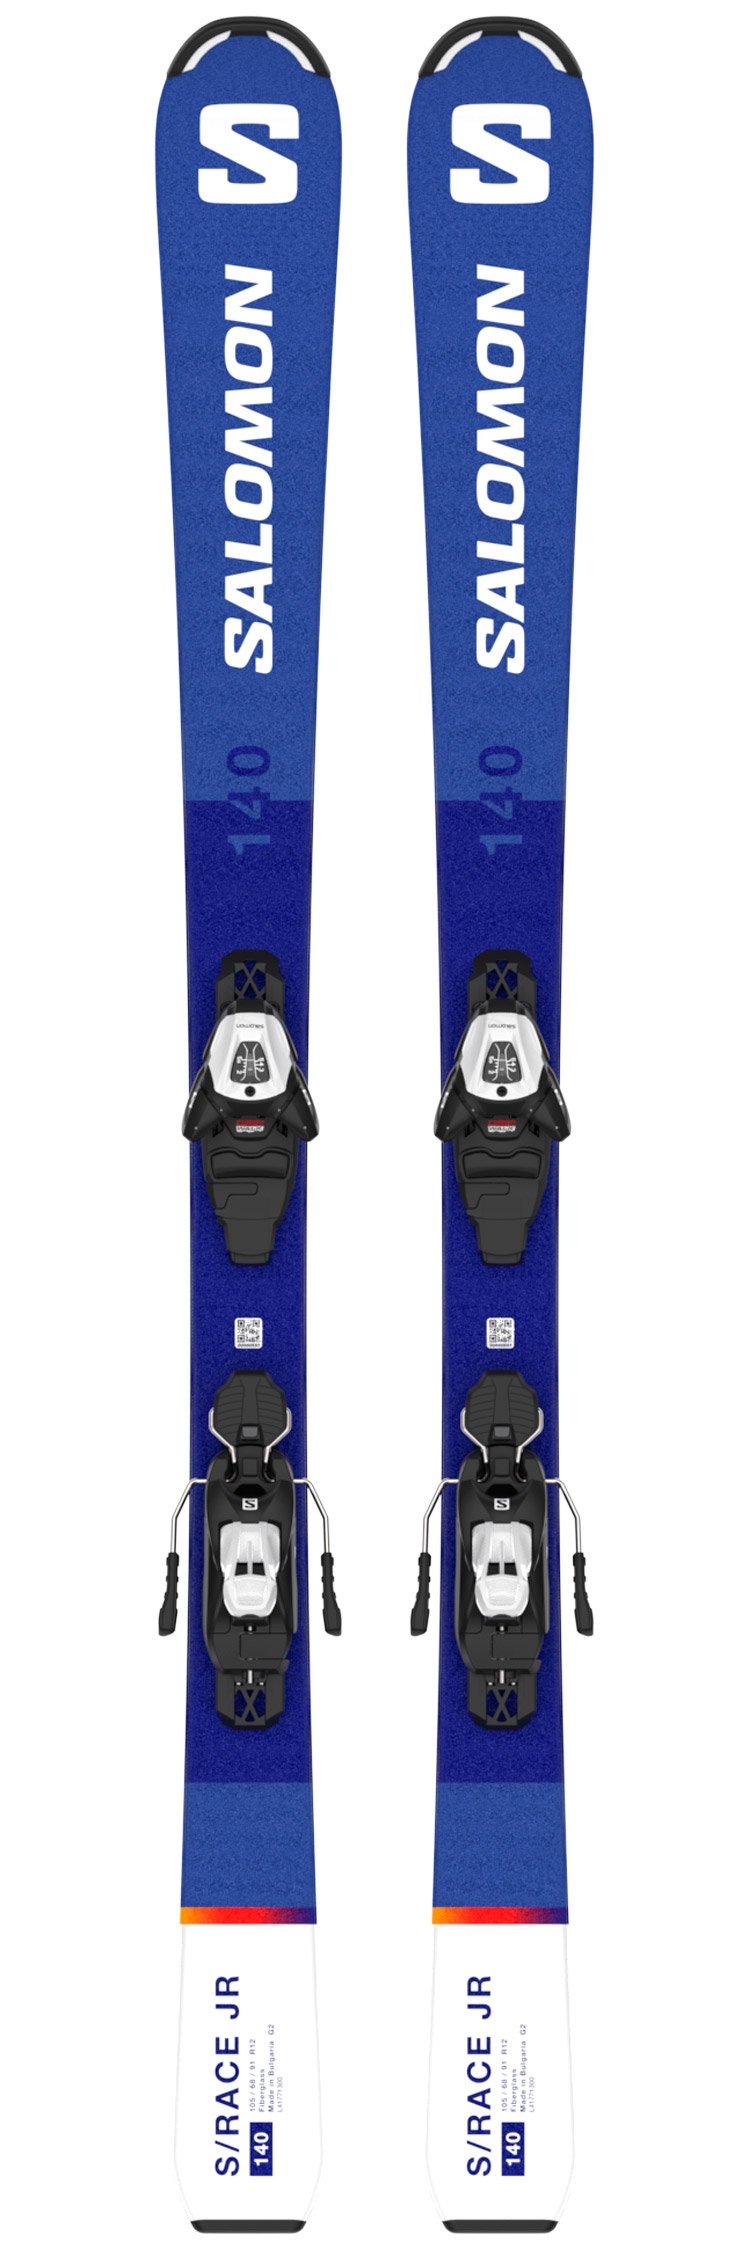 voordelig Wet en regelgeving Rusland Pack Alpiene Ski Salomon L S/Race Jr M + L6 Gw J80 - Winter 2023 | Glisshop